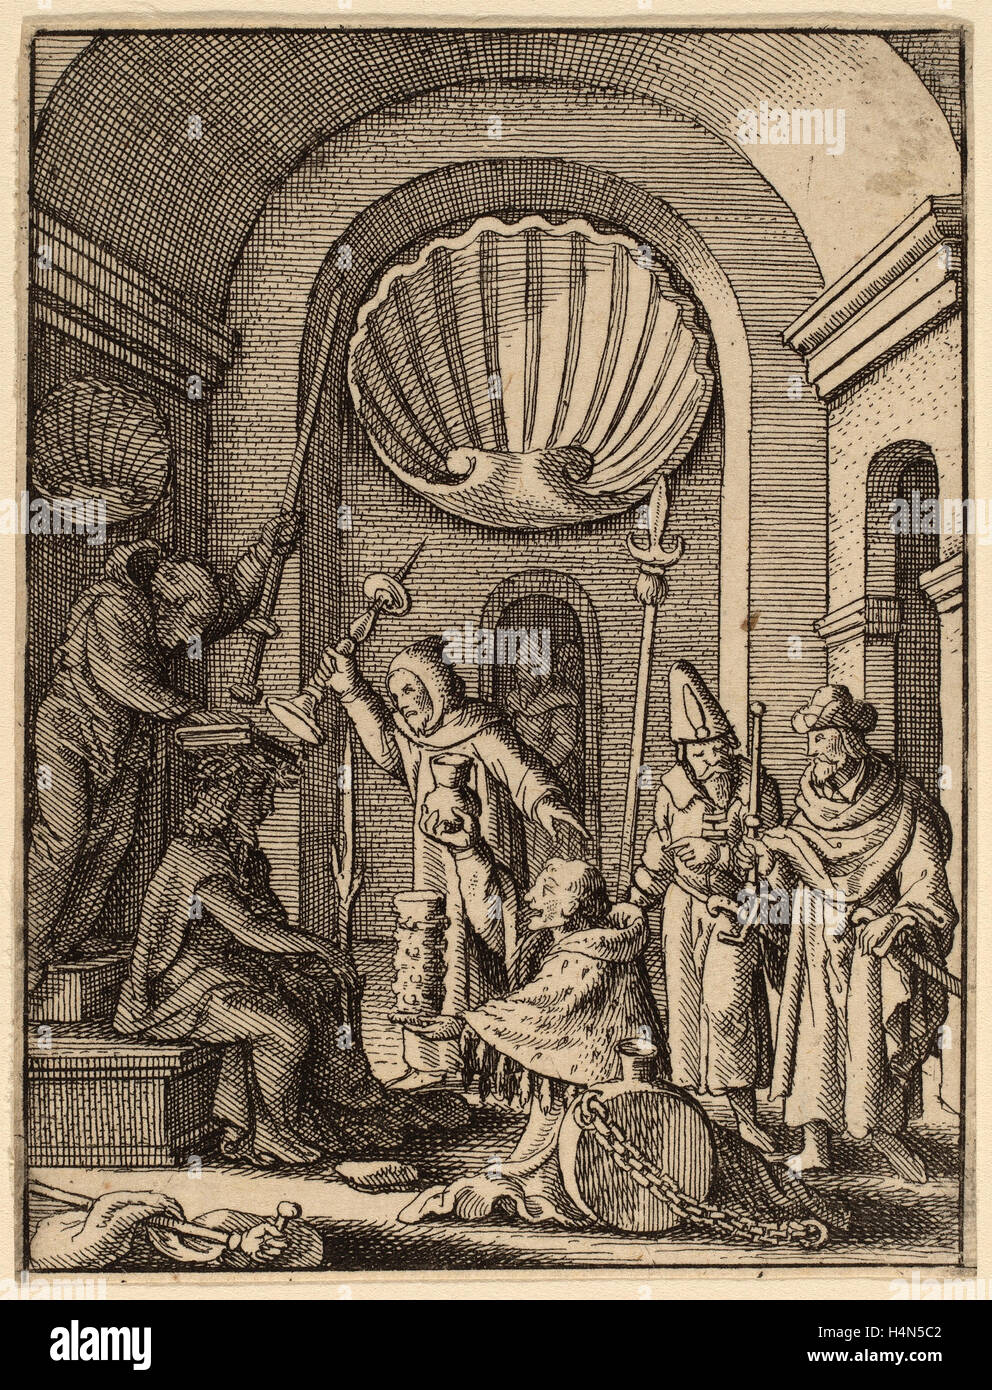 Wenceslaus Hollar (boemo, 1607 - 1677), il beffardo, attacco Foto Stock